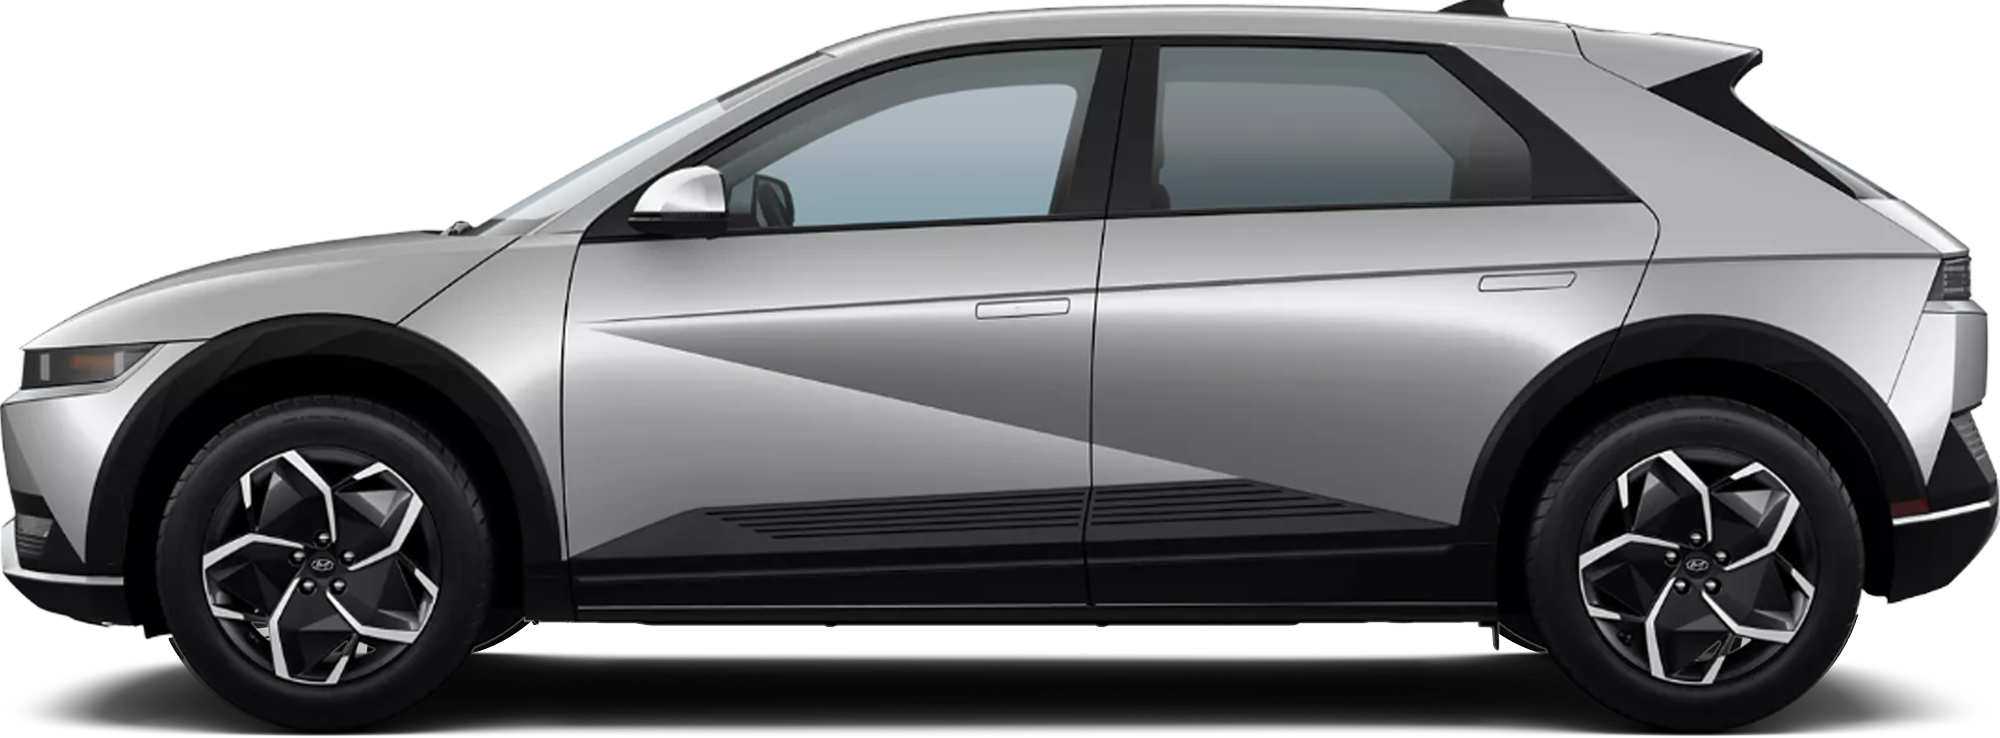 http://images.dealer.com/ddc/vehicles/2023/Hyundai/IONIQ%205/SUV/trim_SE_eb9cdc/perspective/side-left/2023_24.png